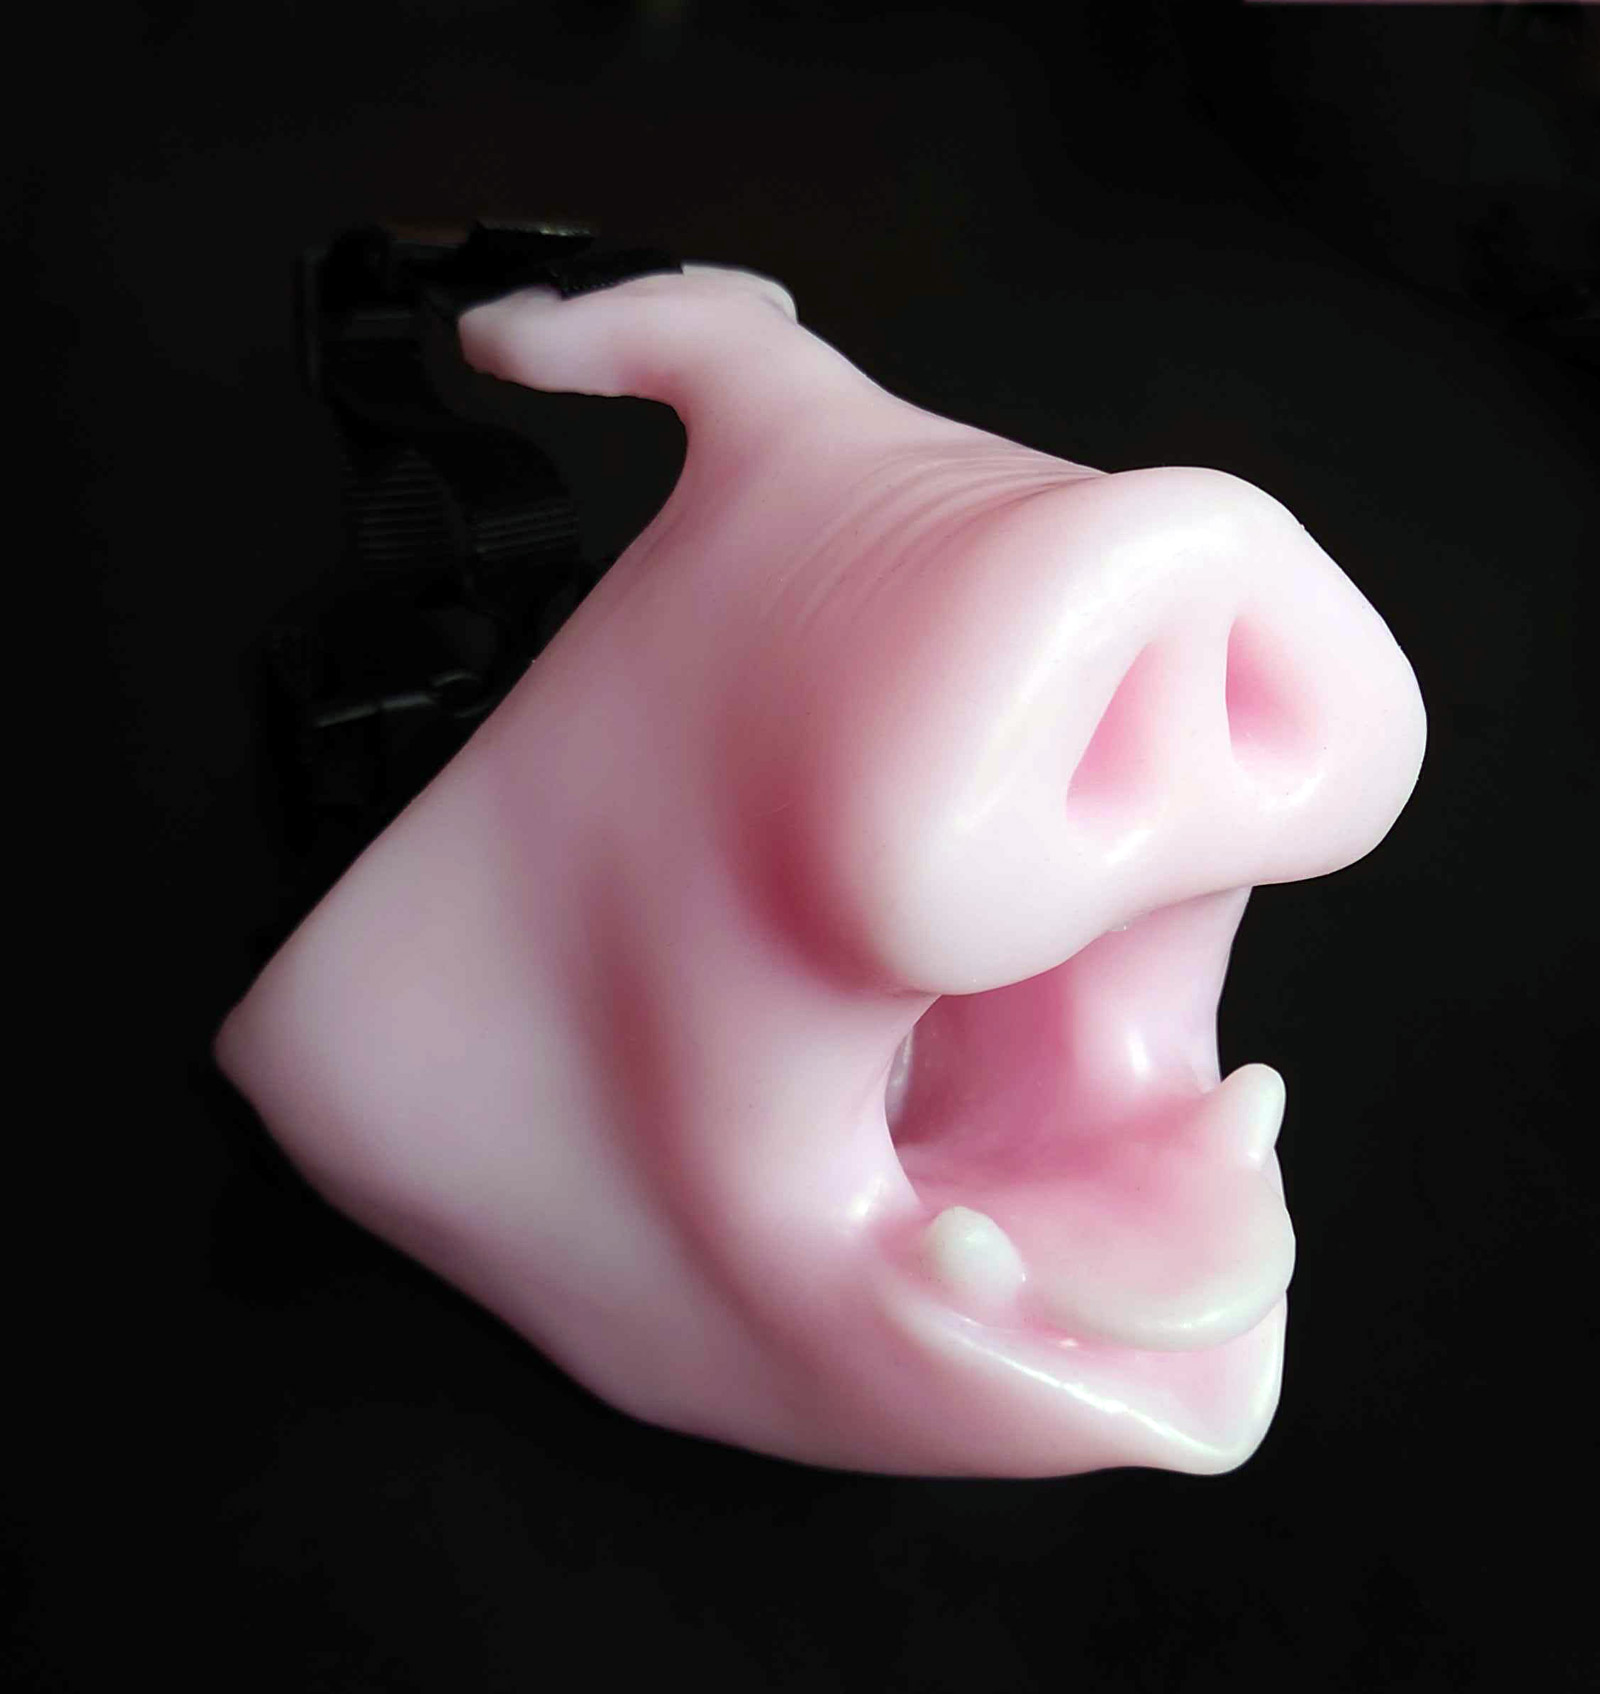 Half Pig Mask